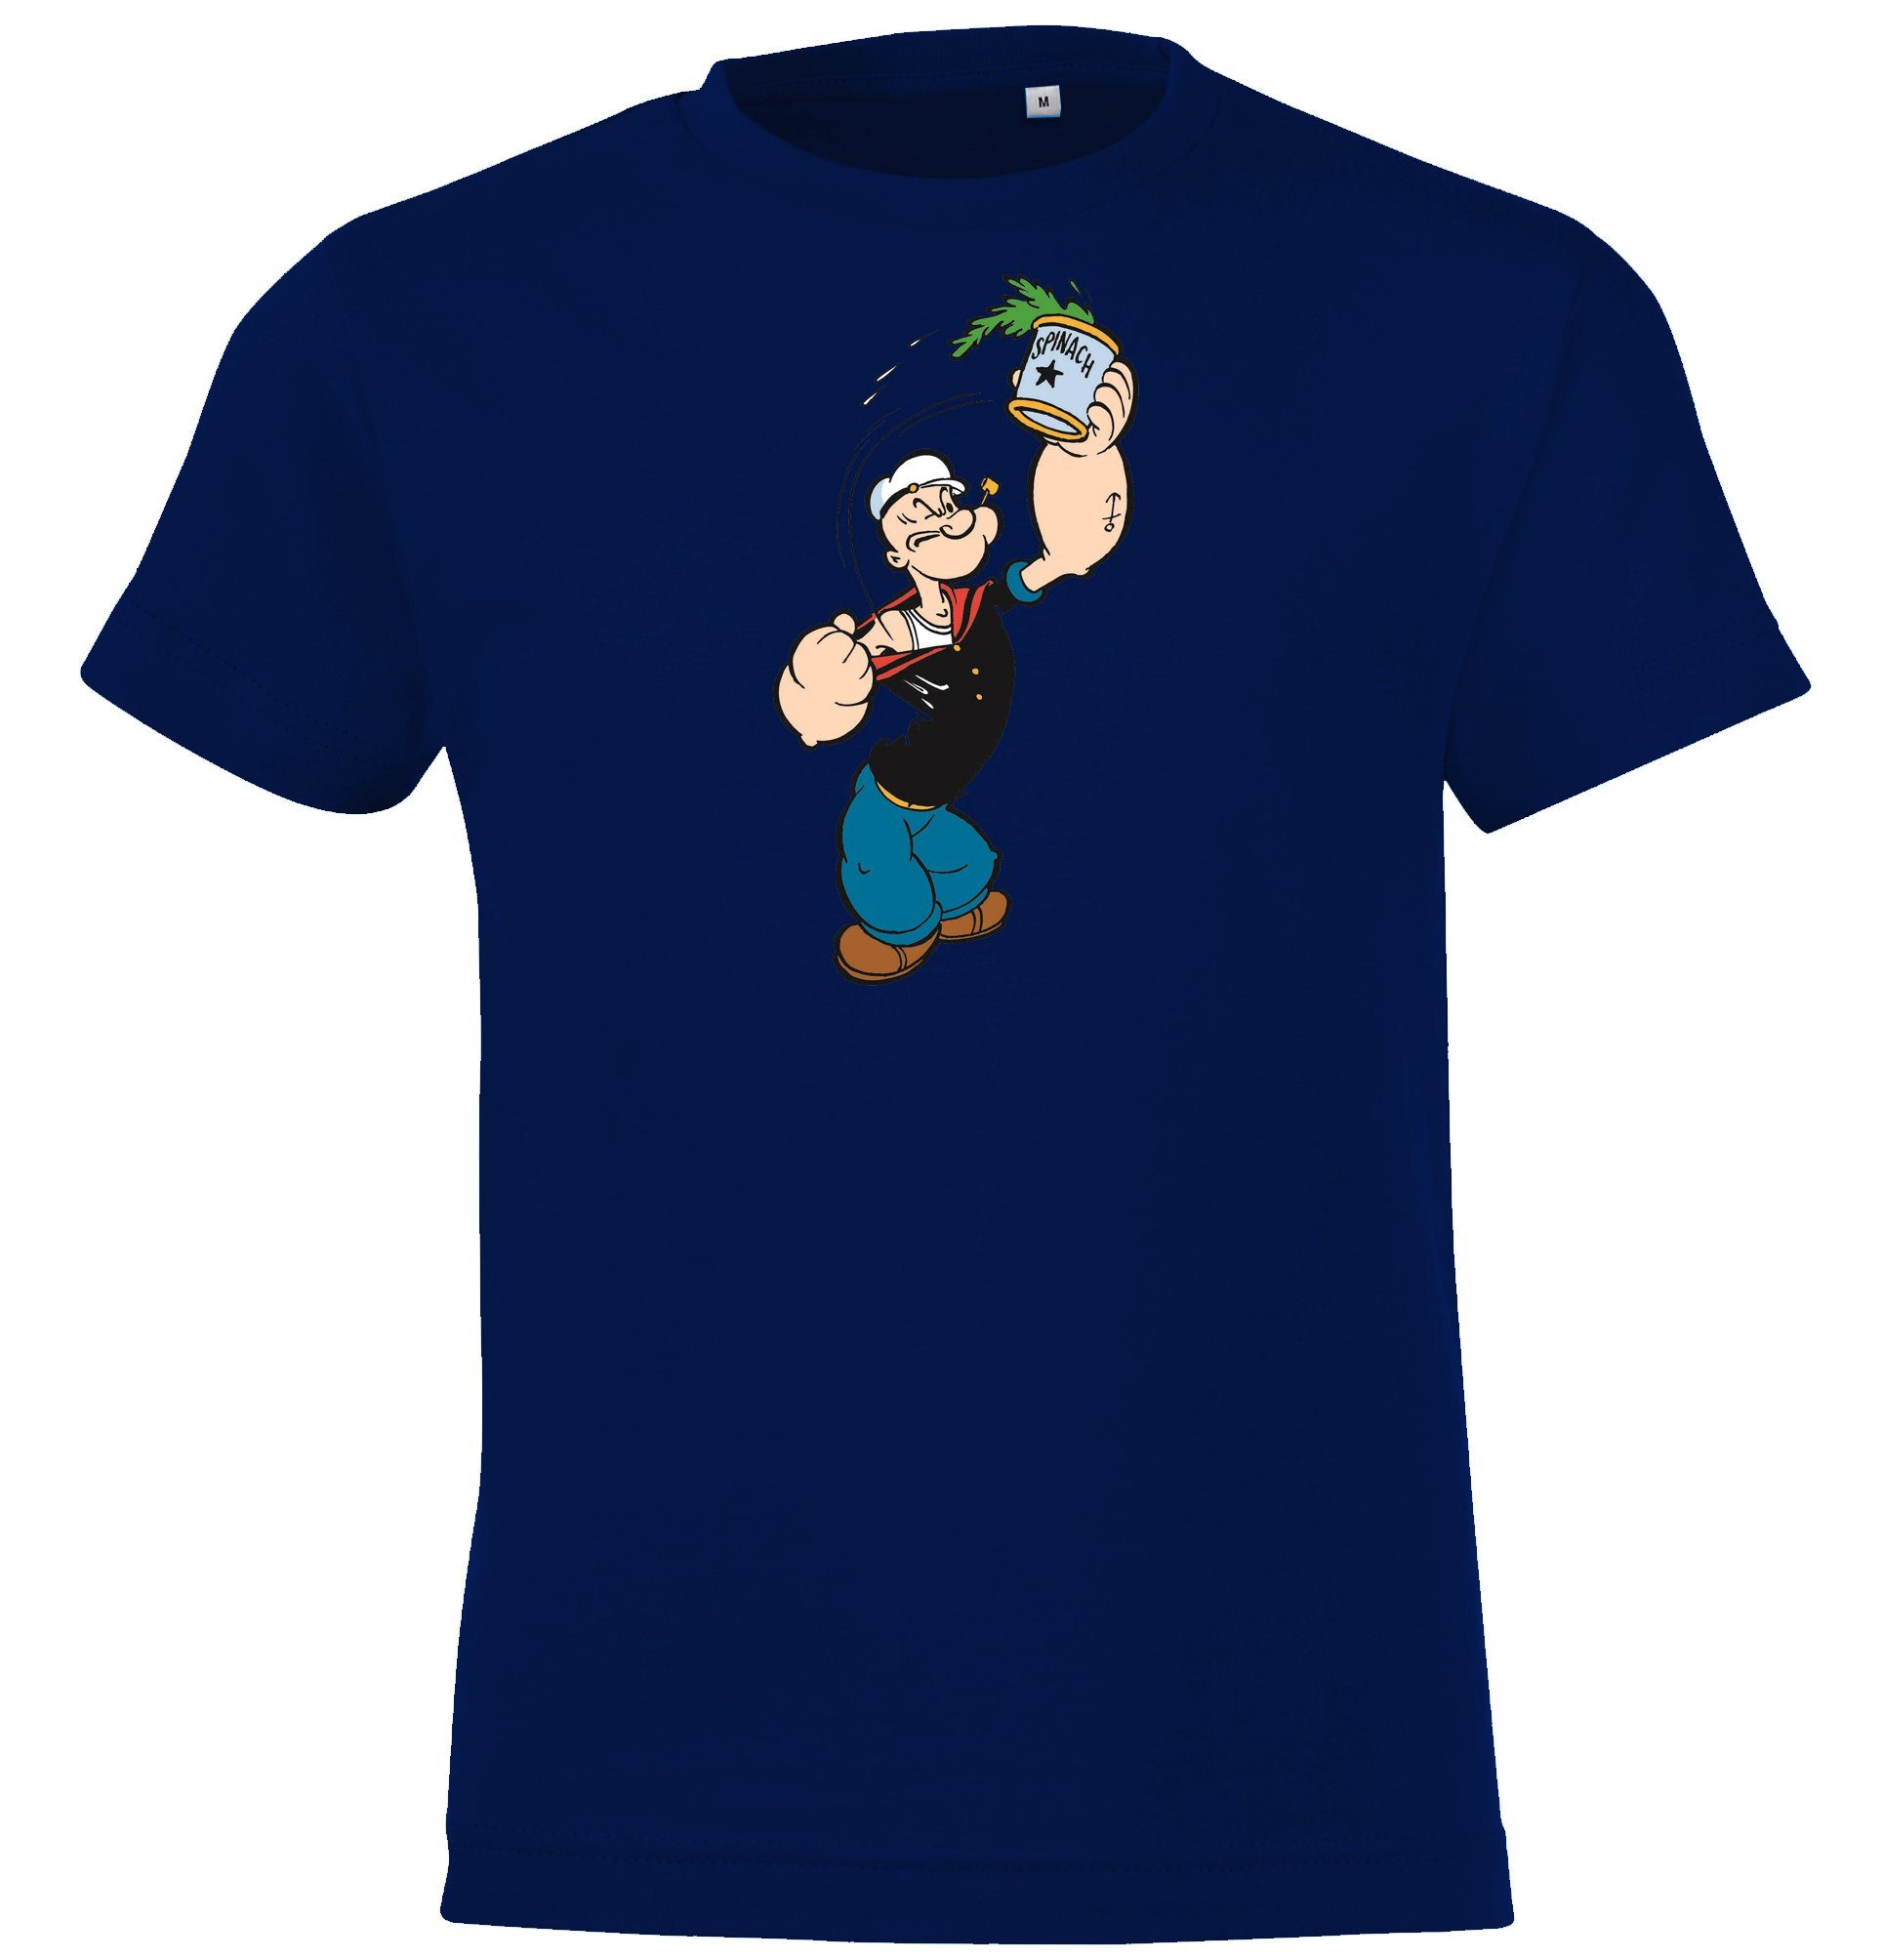 Youth Designz T-Shirt trendigem Navyblau Mit Popeye Print Front Modell Kinder T-Shirt